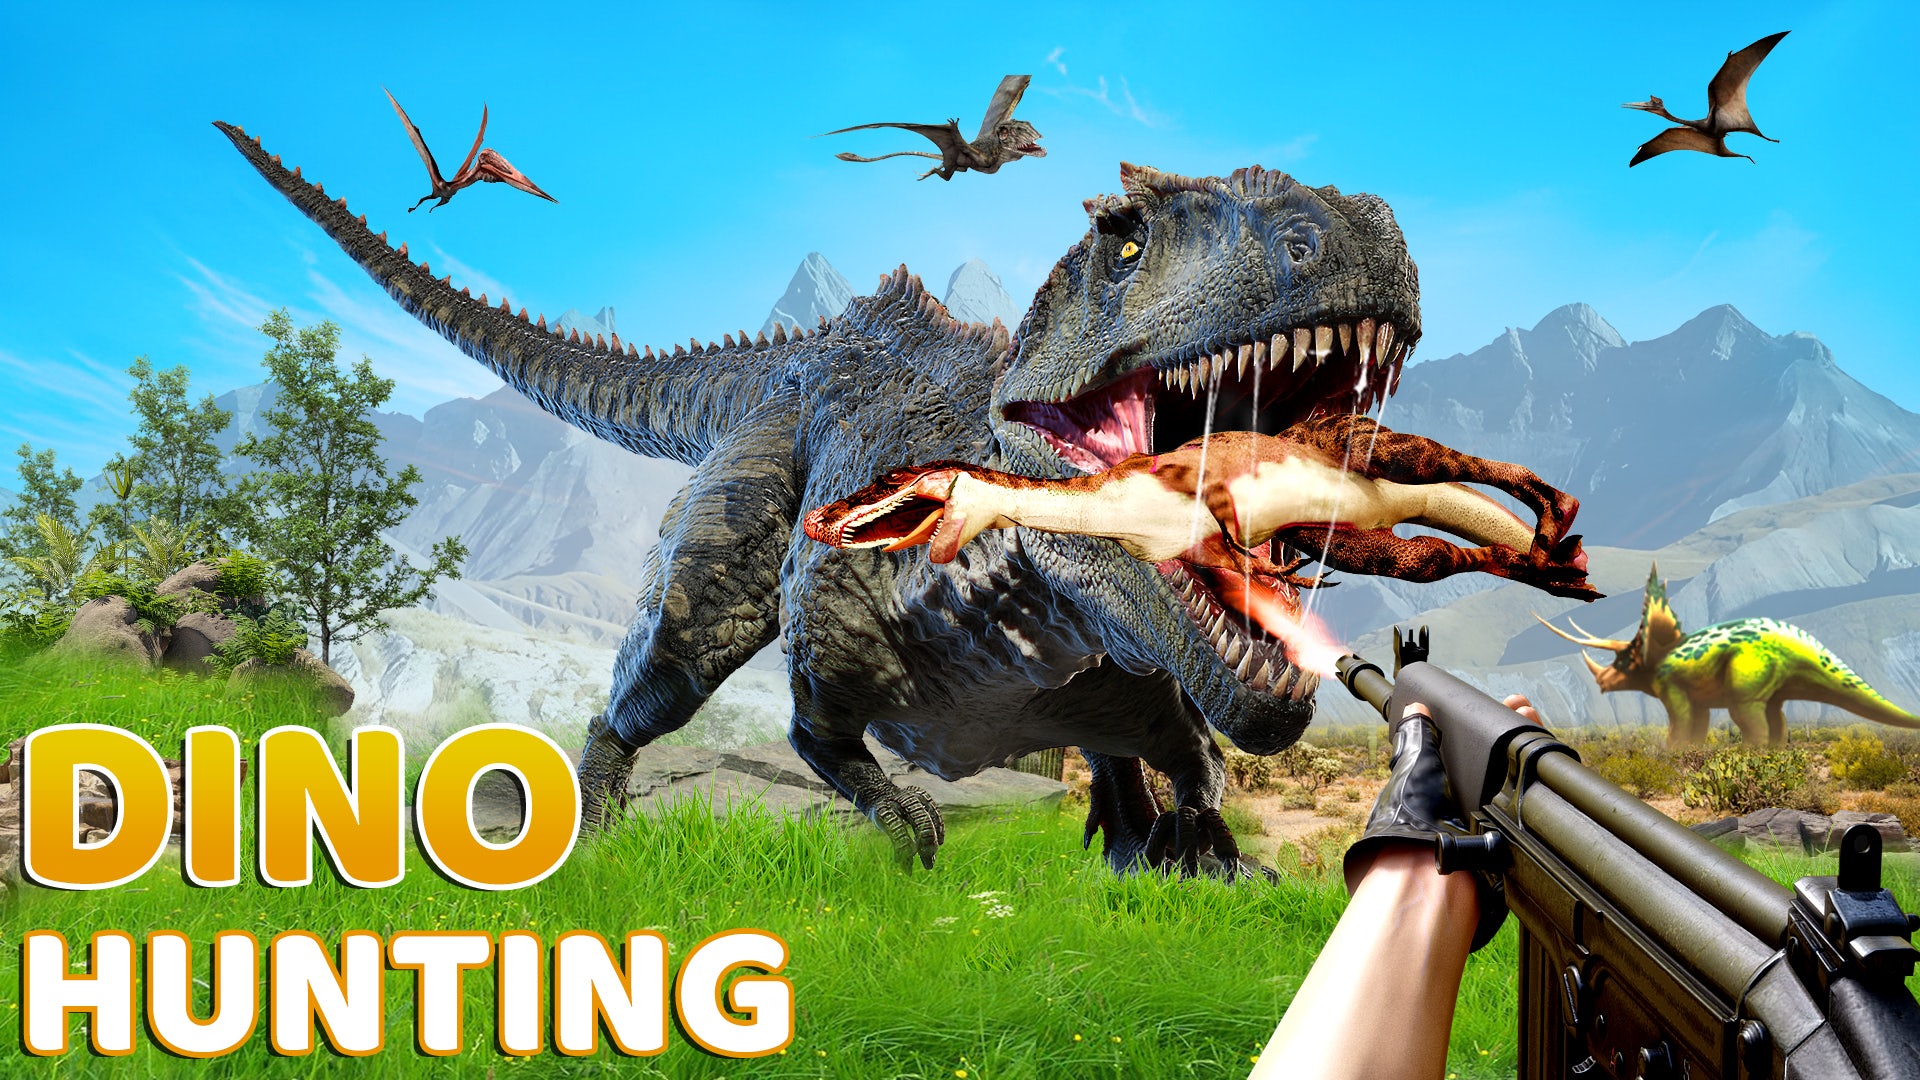 Dino Hunting Jurassic World